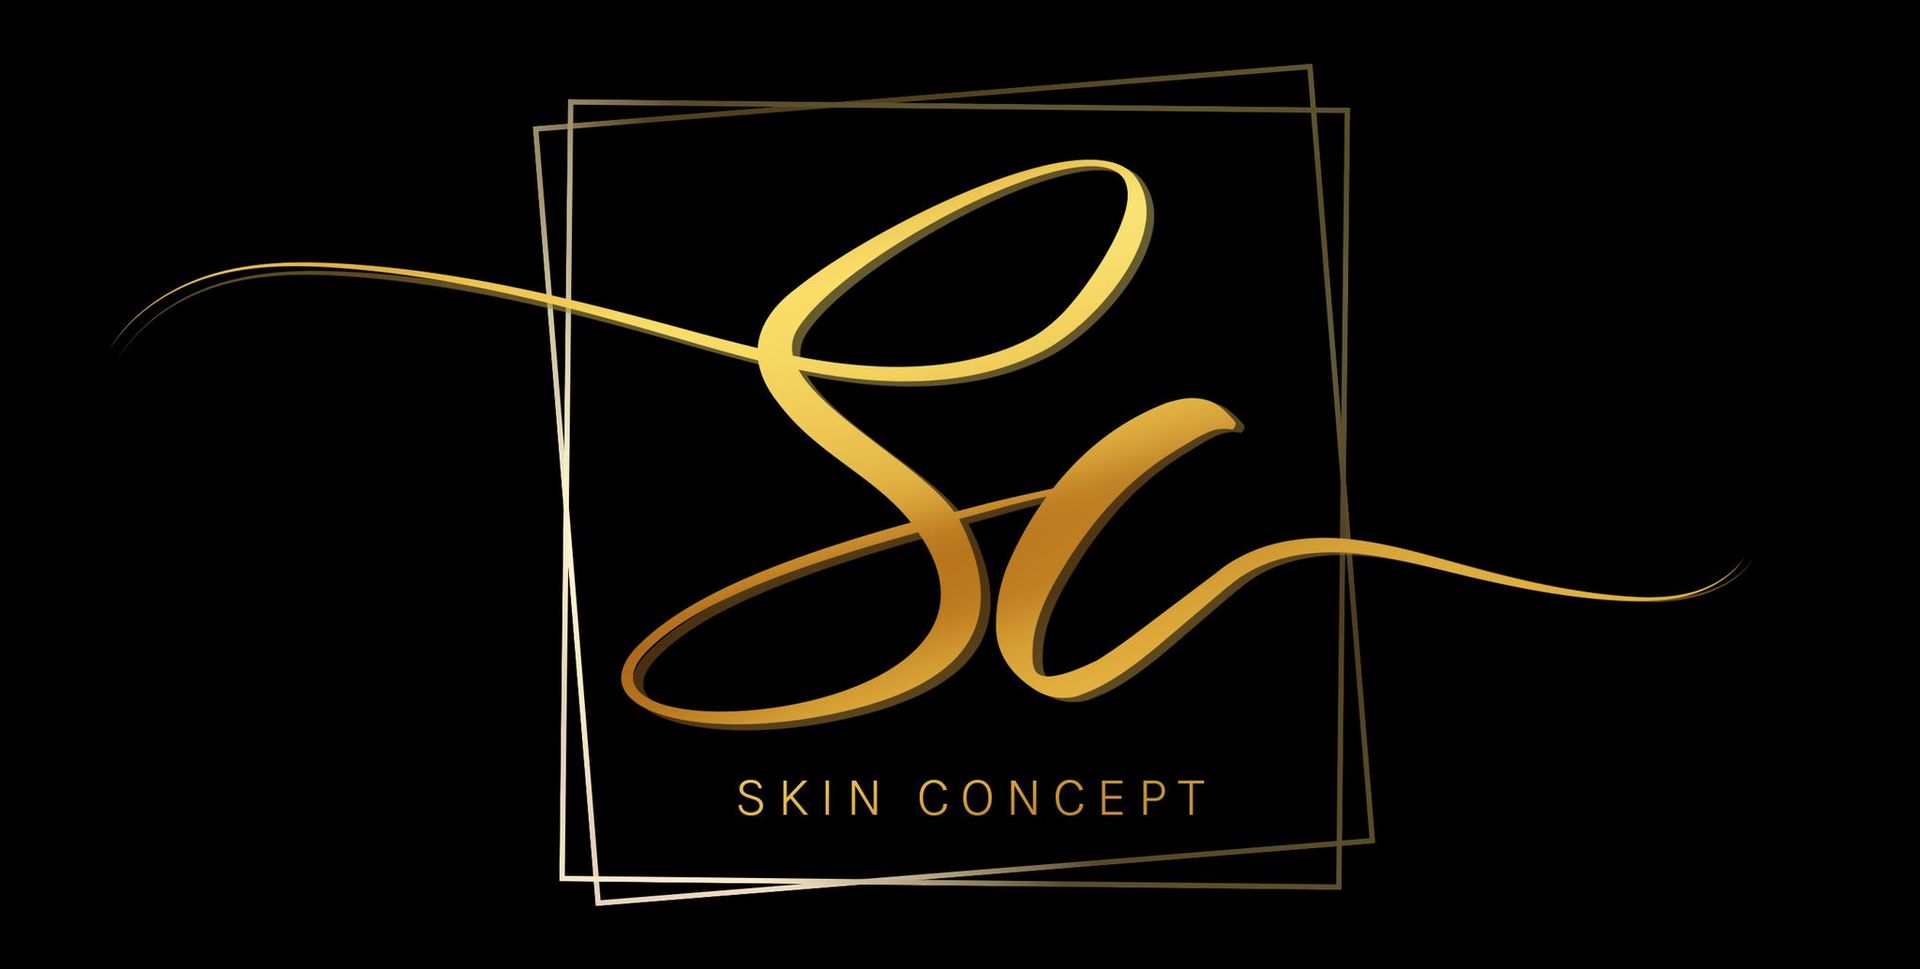 Skin concept